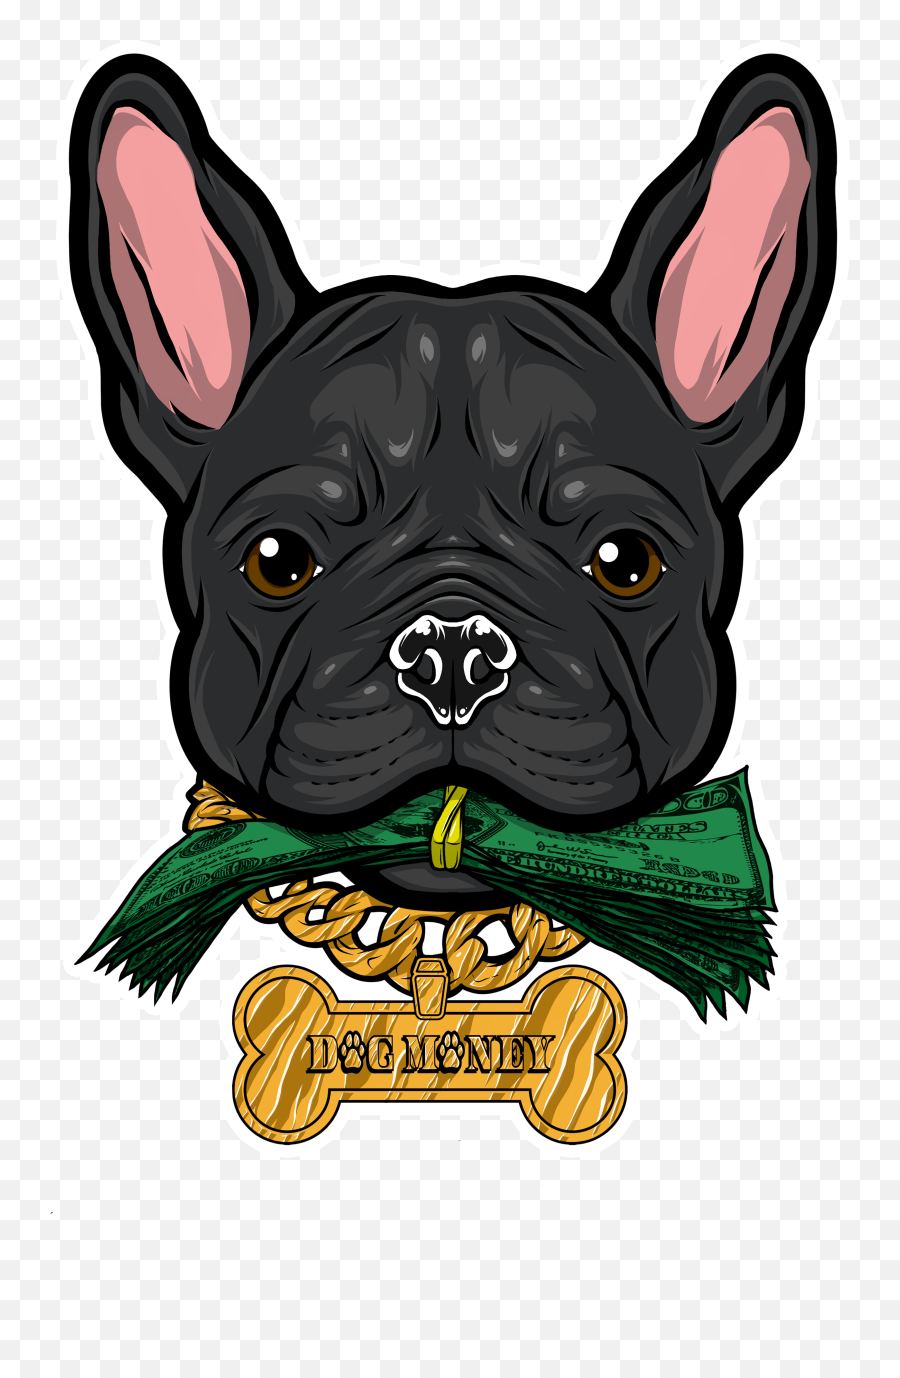 Dog Money On Behance Emoji,Free English Bulldog Emoticons